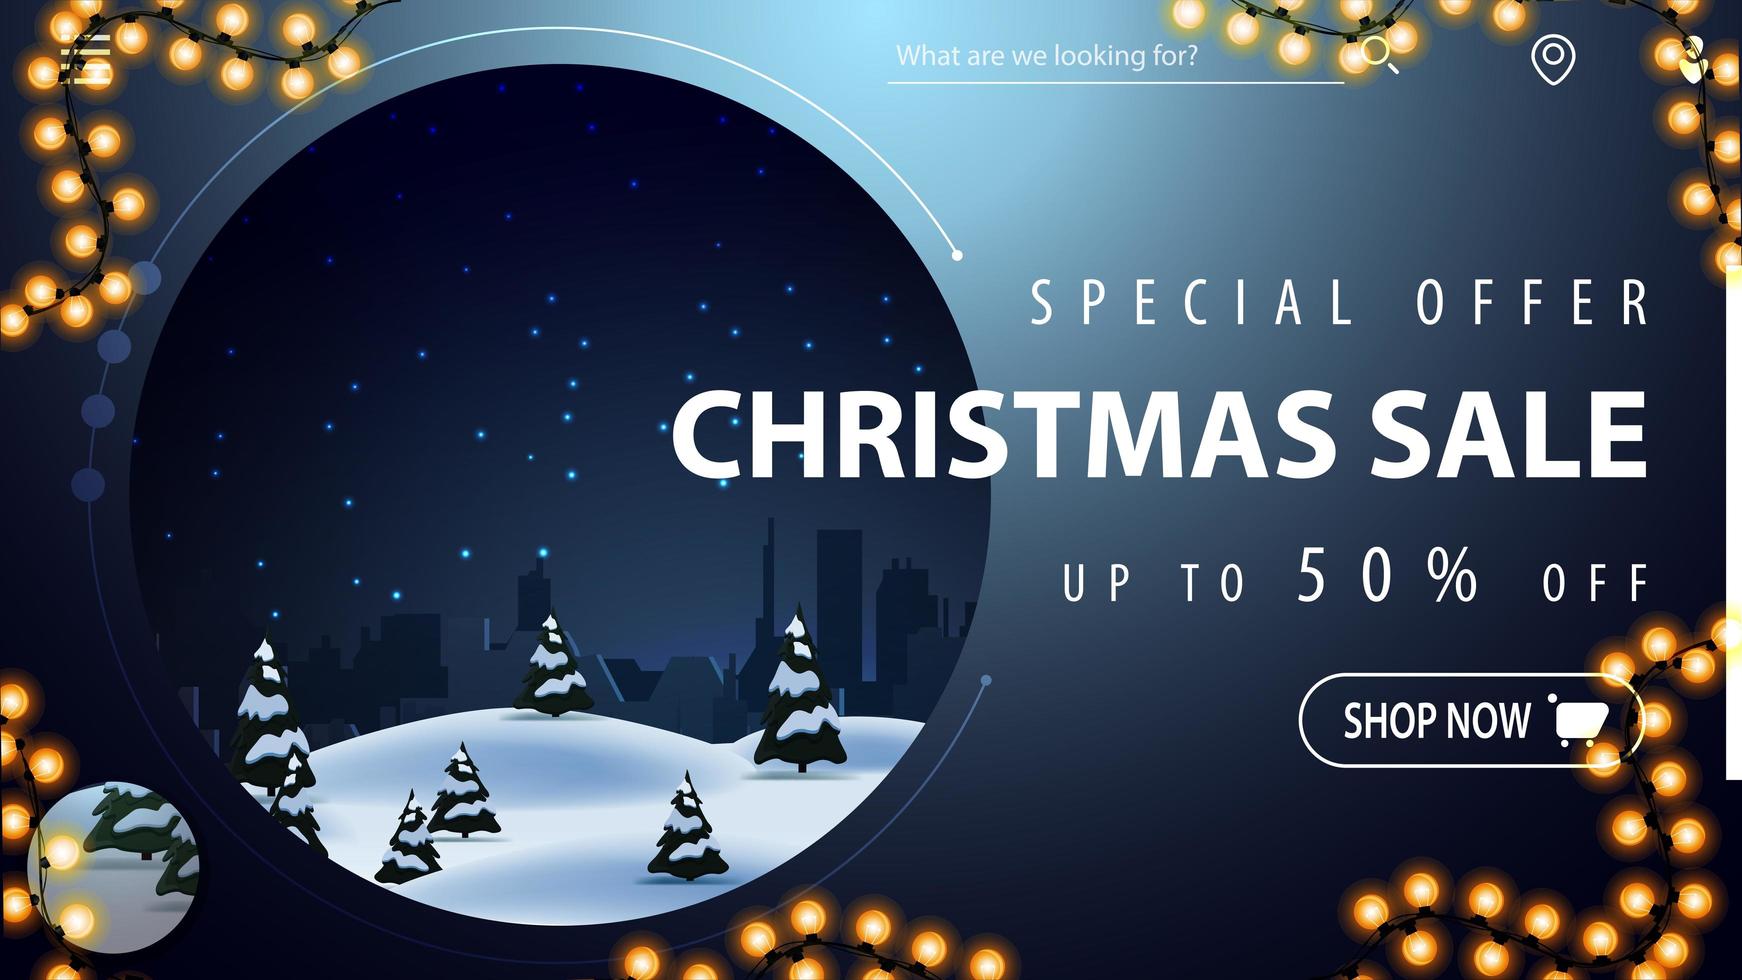 speciale aanbieding, kerstuitverkoop, tot 50 korting, mooie blauwe moderne kortingsbanner met winterlandschap op achtergrond en slingerframe vector